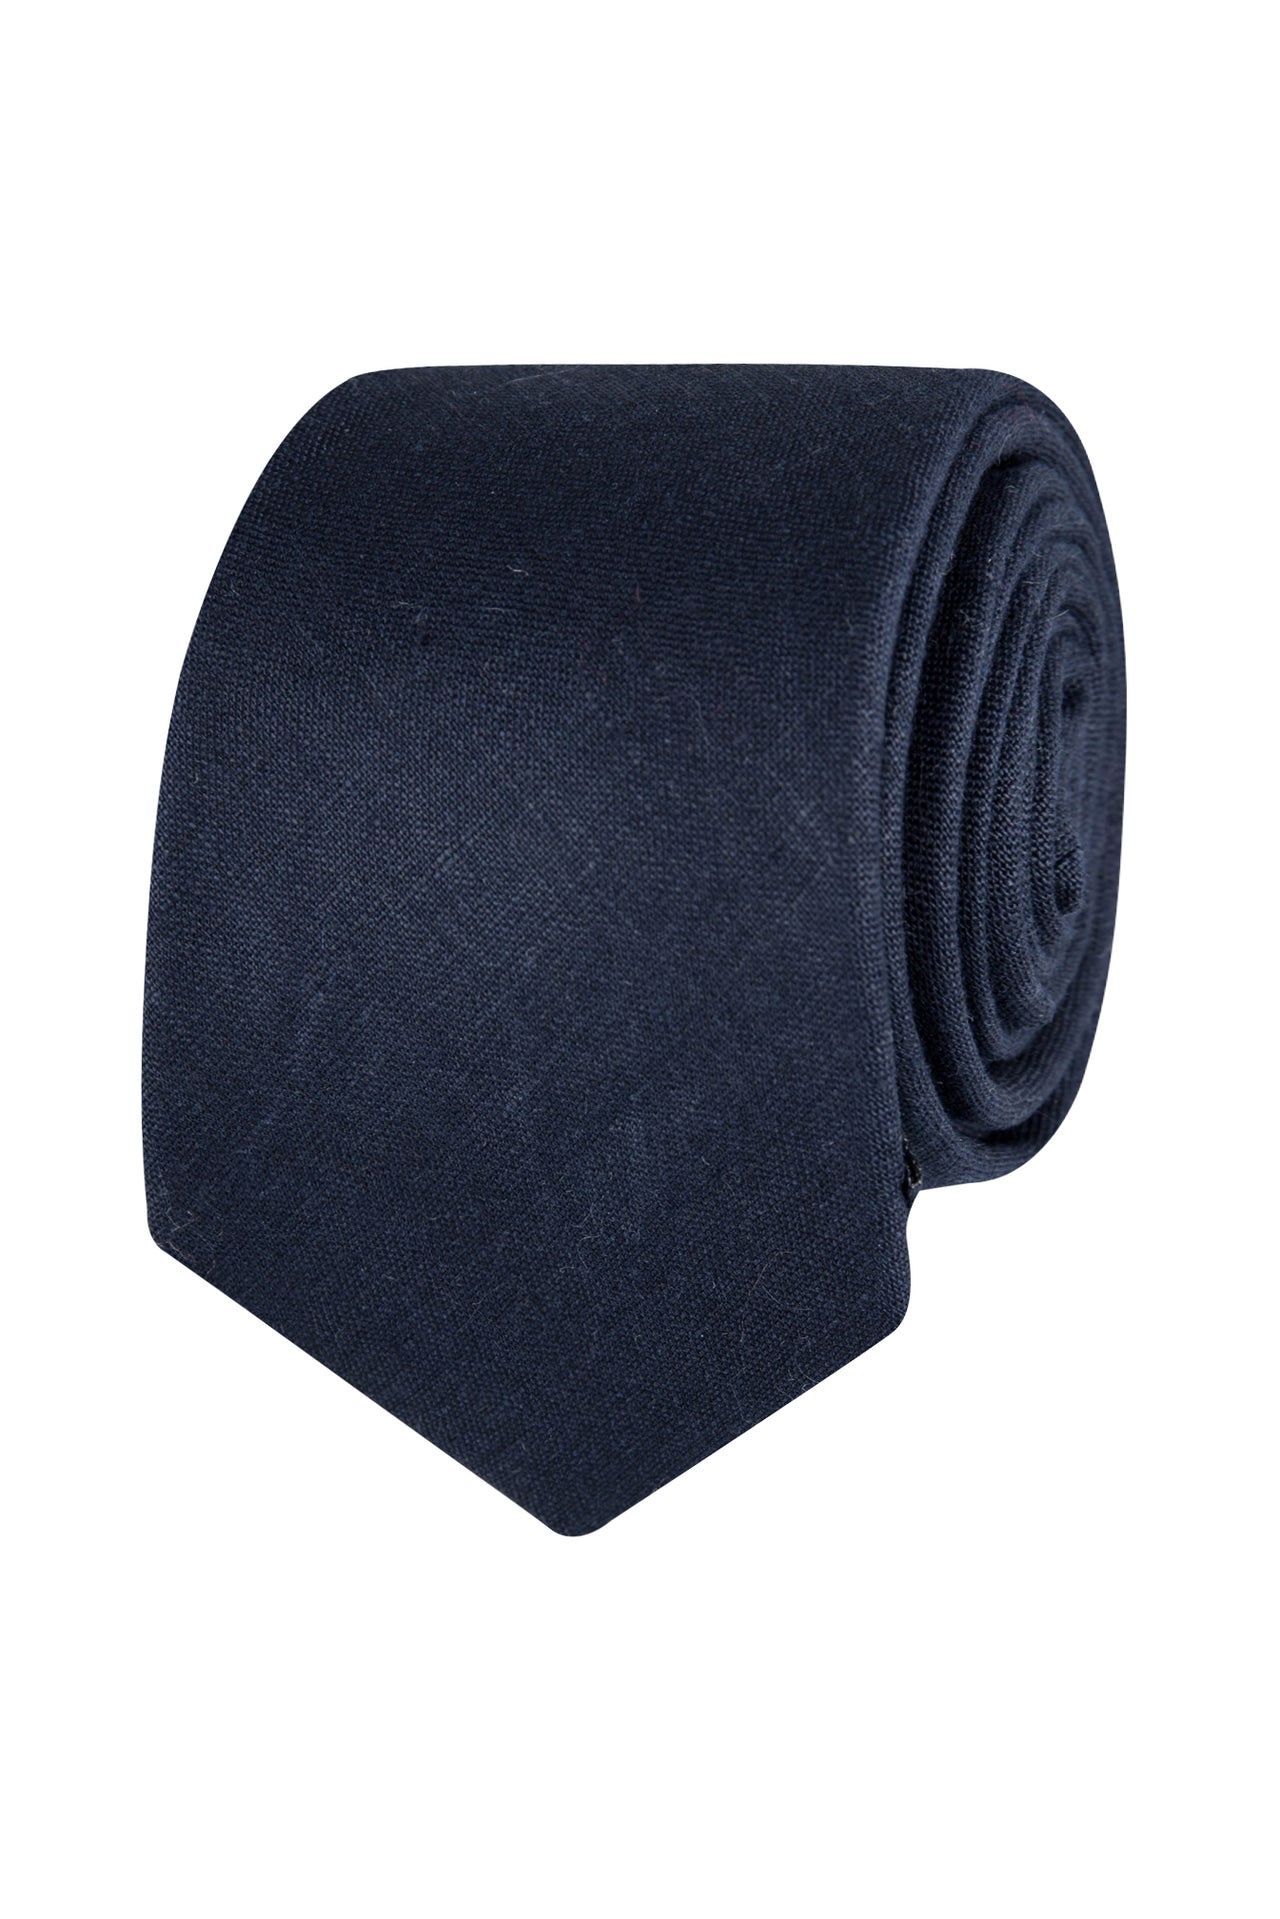 ABELARD Plain Linen Tie NAVY